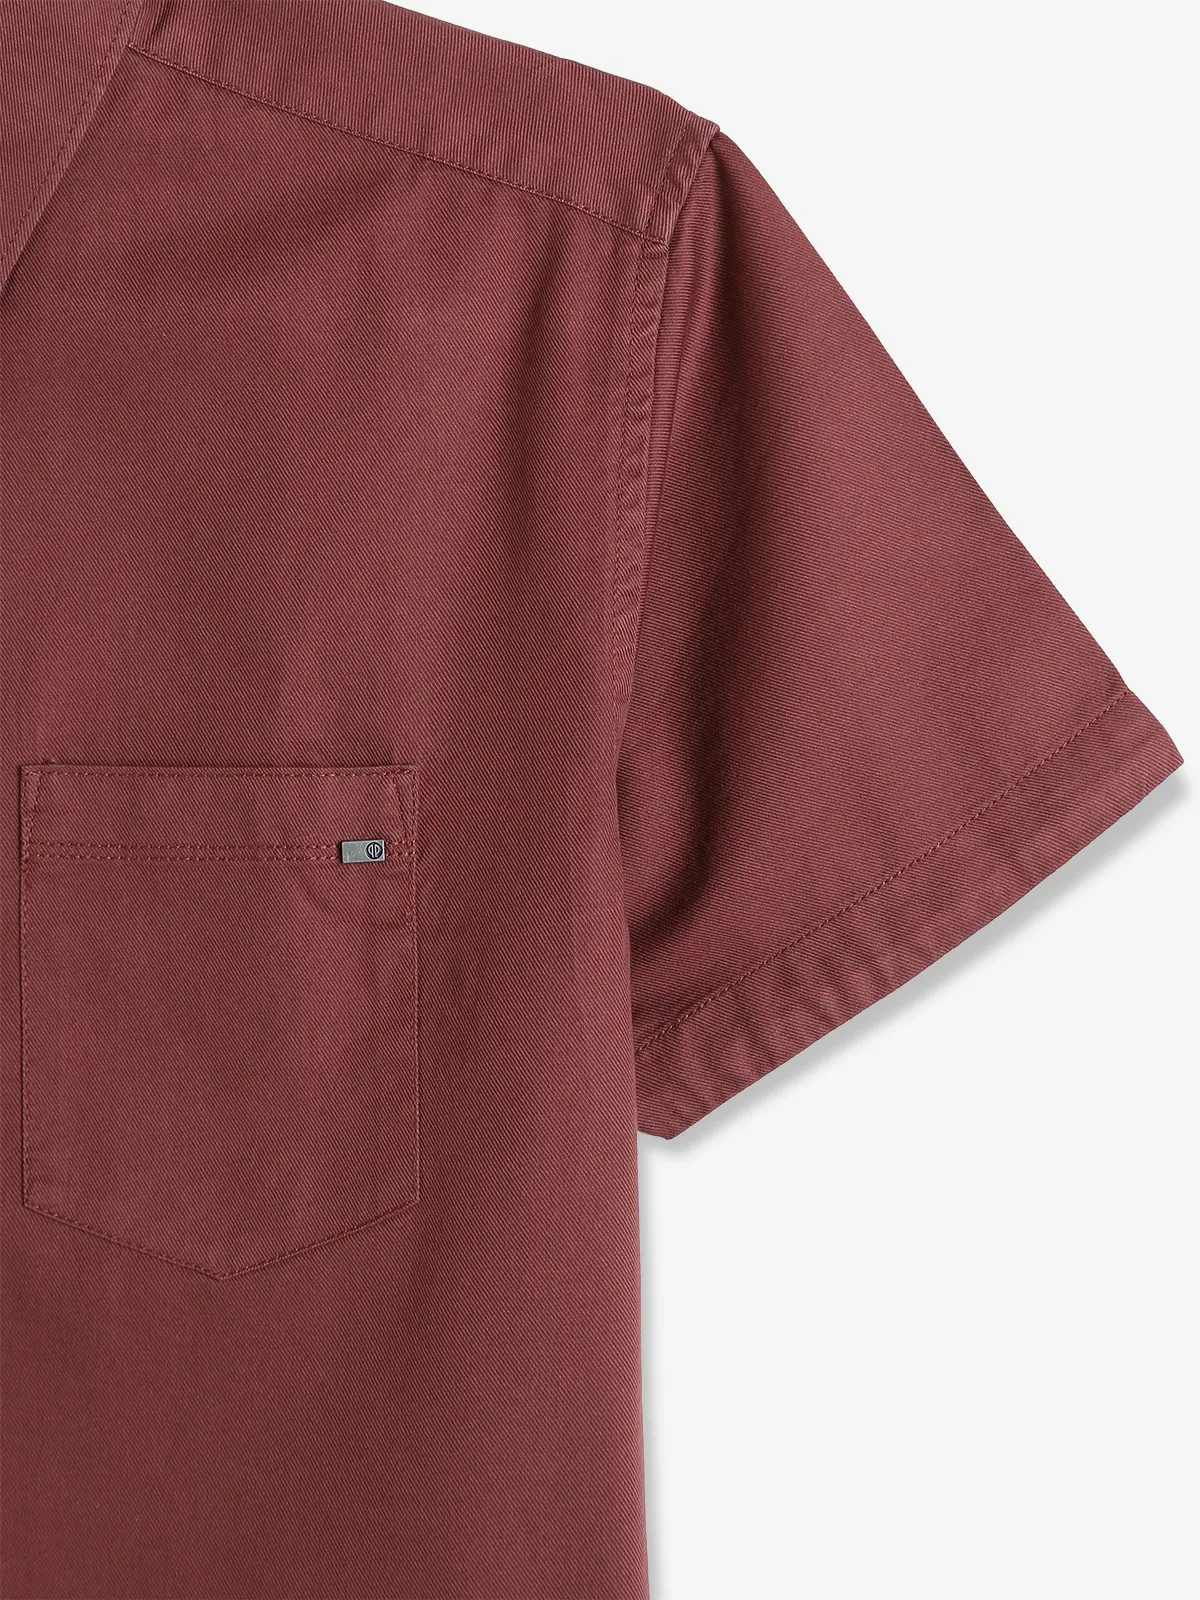 PIONEER maroon palin cotton shirt